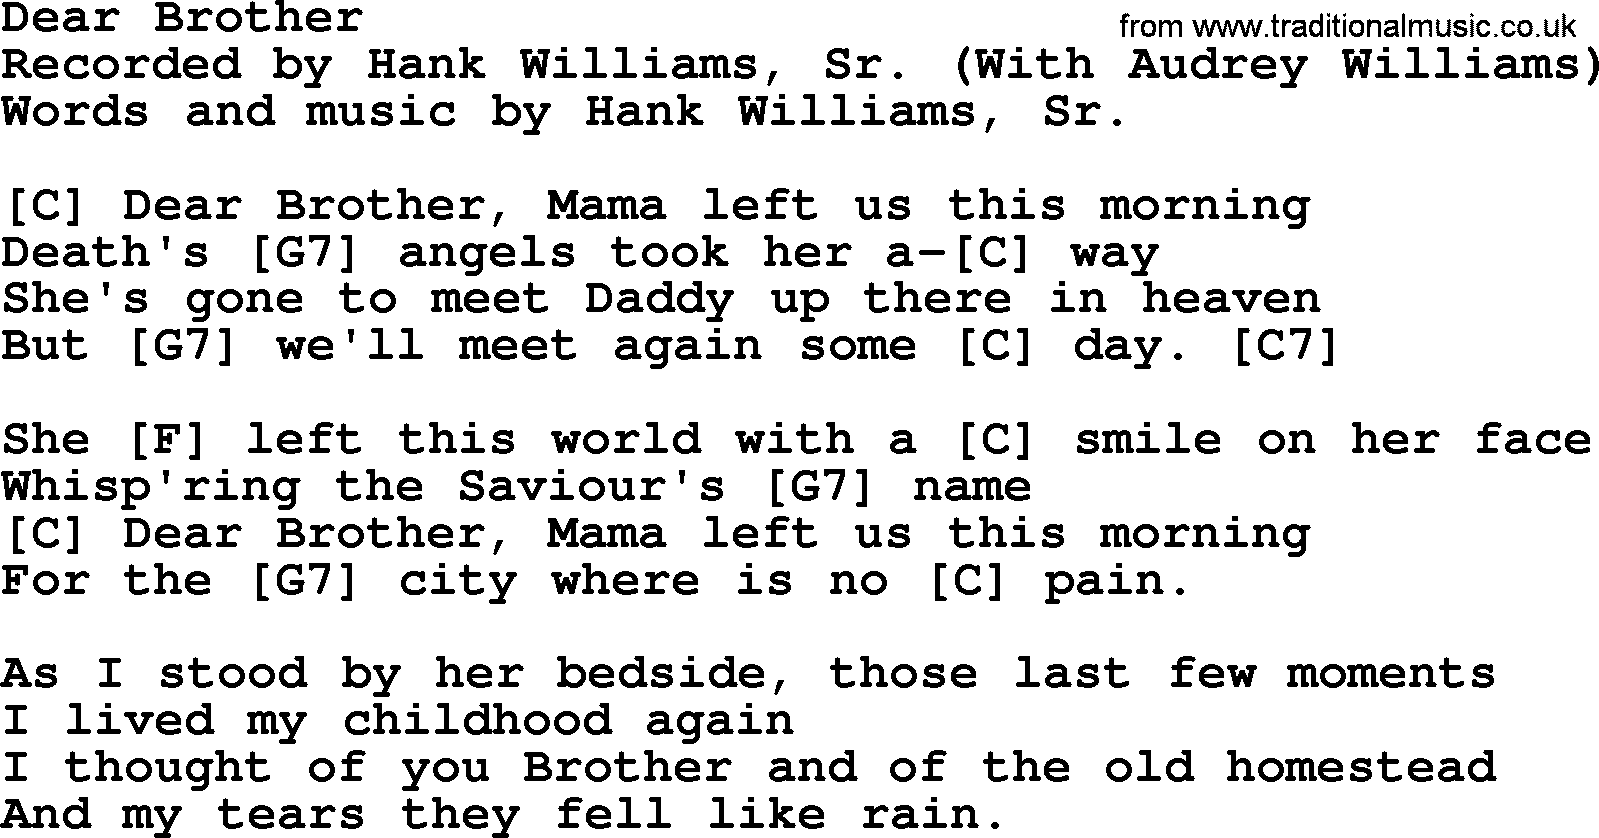 Hank Williams song Dear Brother, lyrics and chords